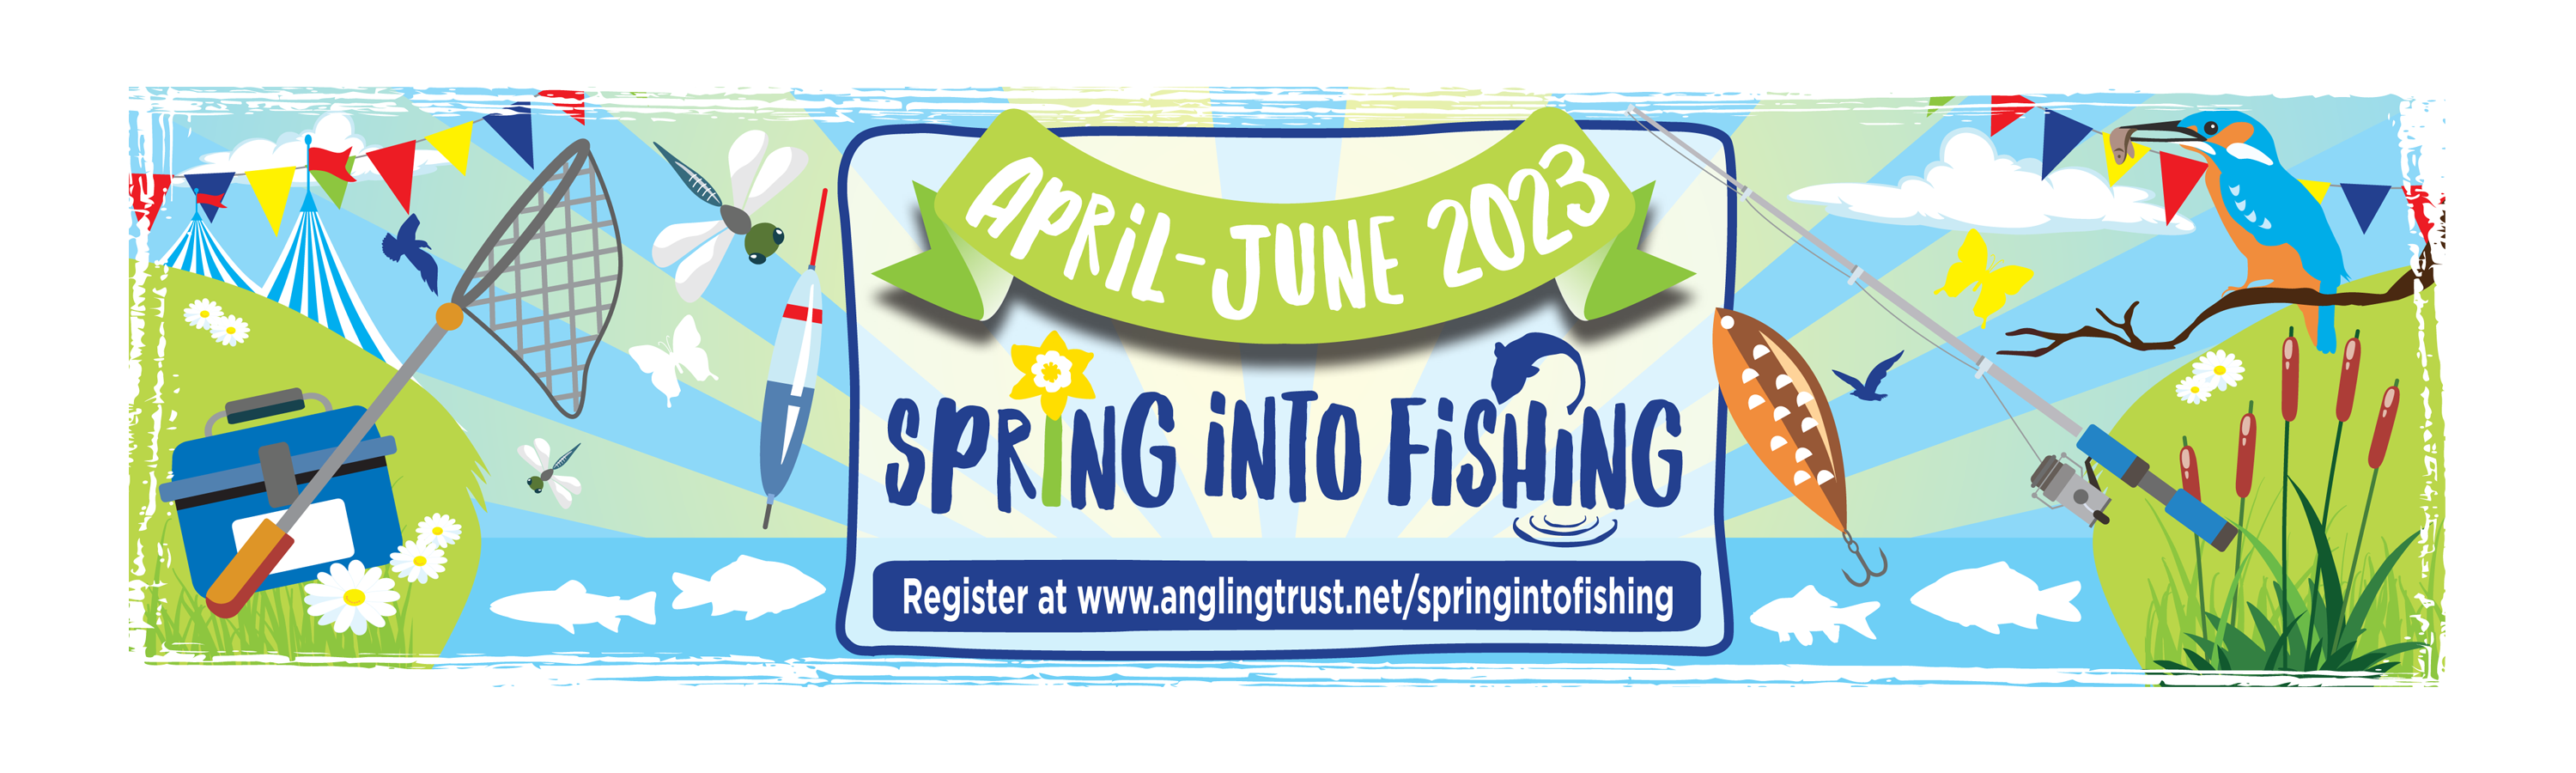 Get Fishing | Spring into Fishing website-header-2